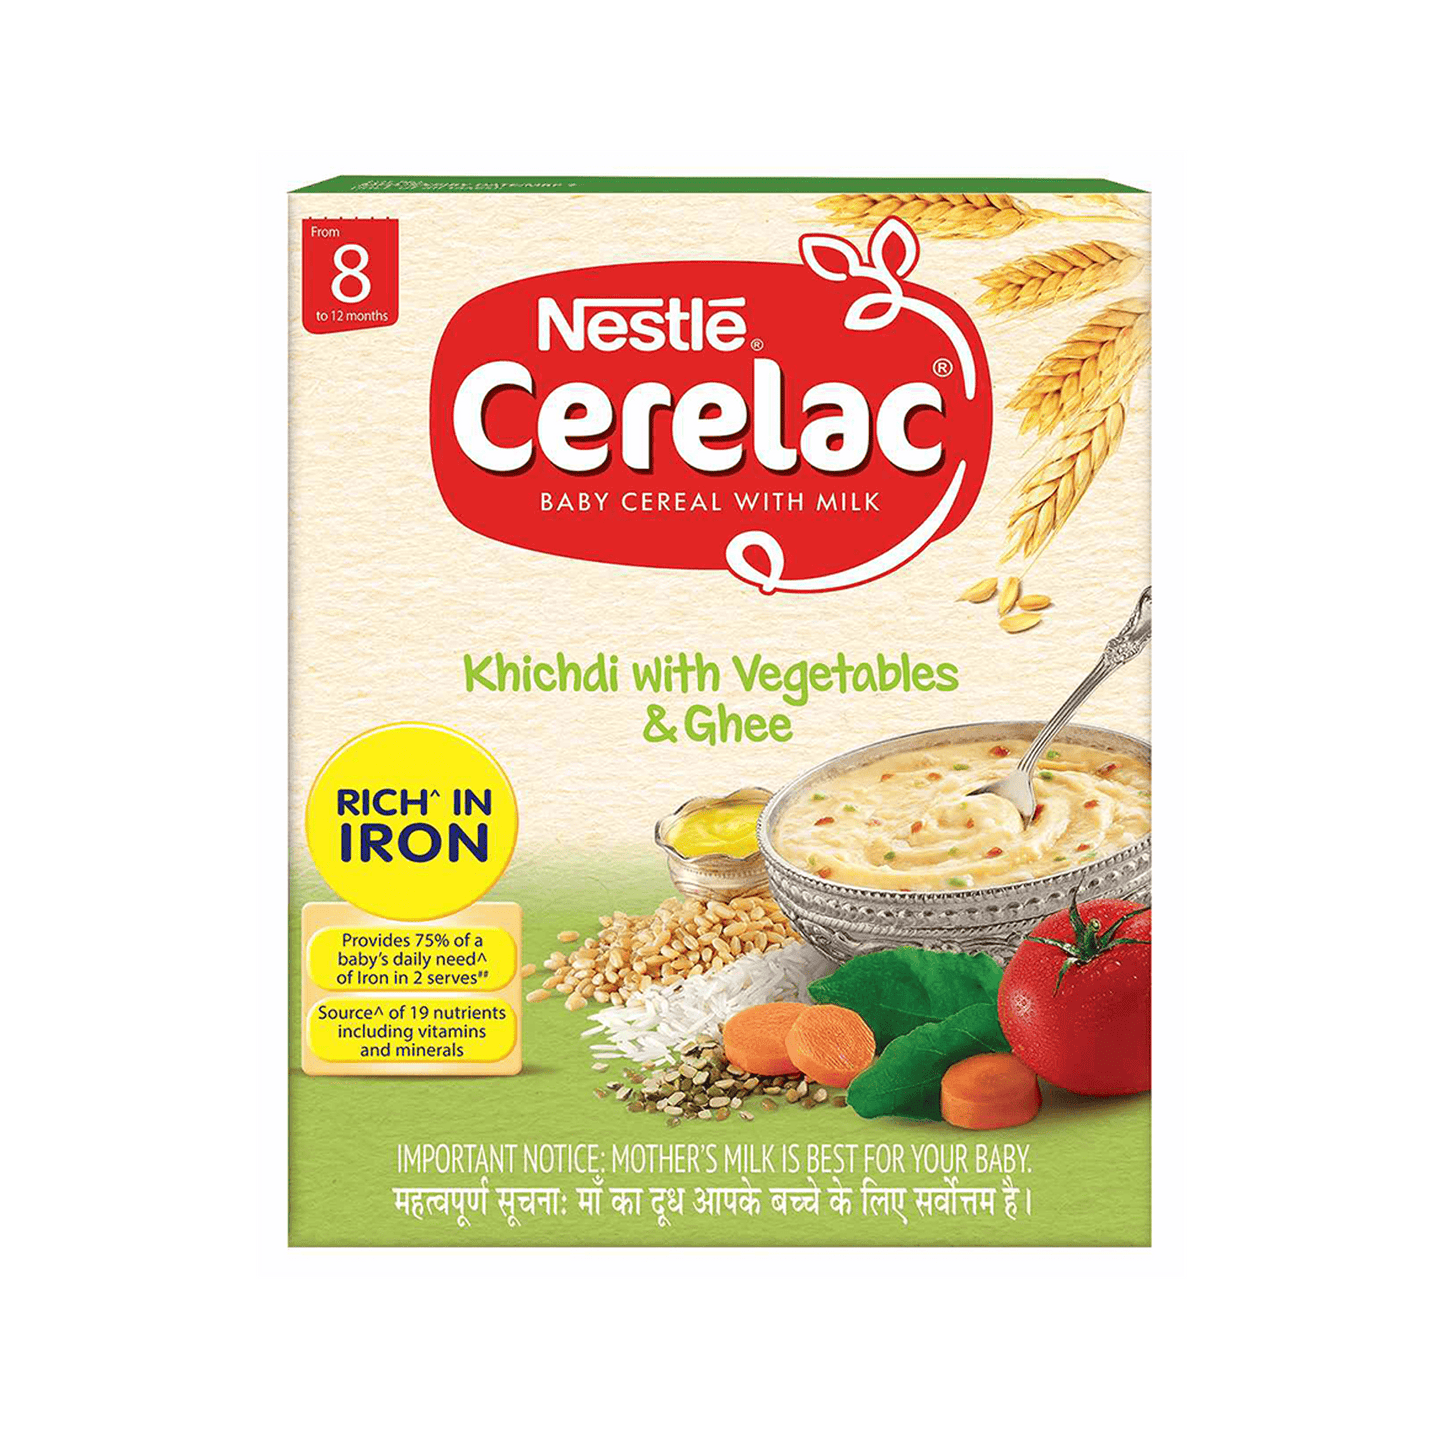 Nestle Cerelac with Milk - Kichidi with Vegetables & Ghee.